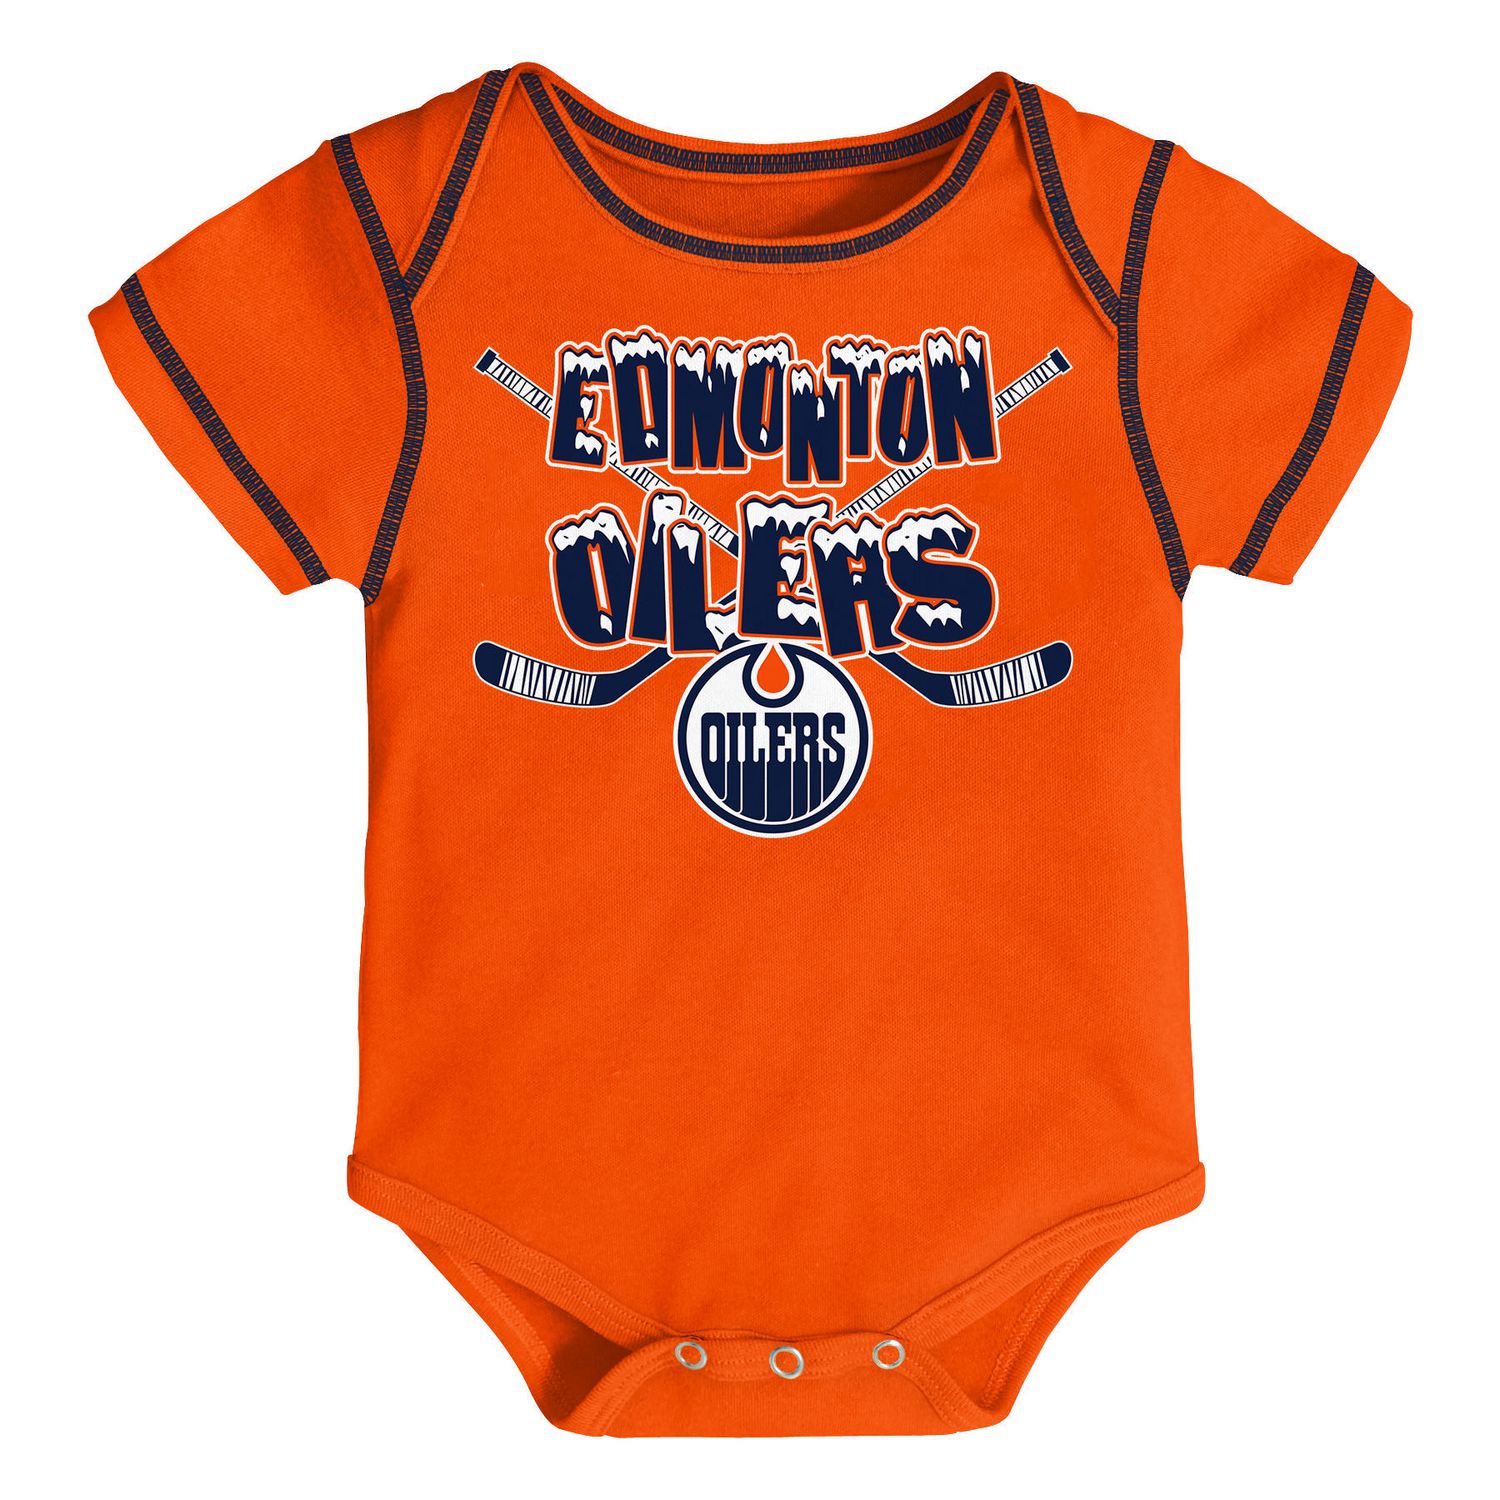 Edmonton Oilers Baby Apparel, Baby Oilers Clothing, Merchandise